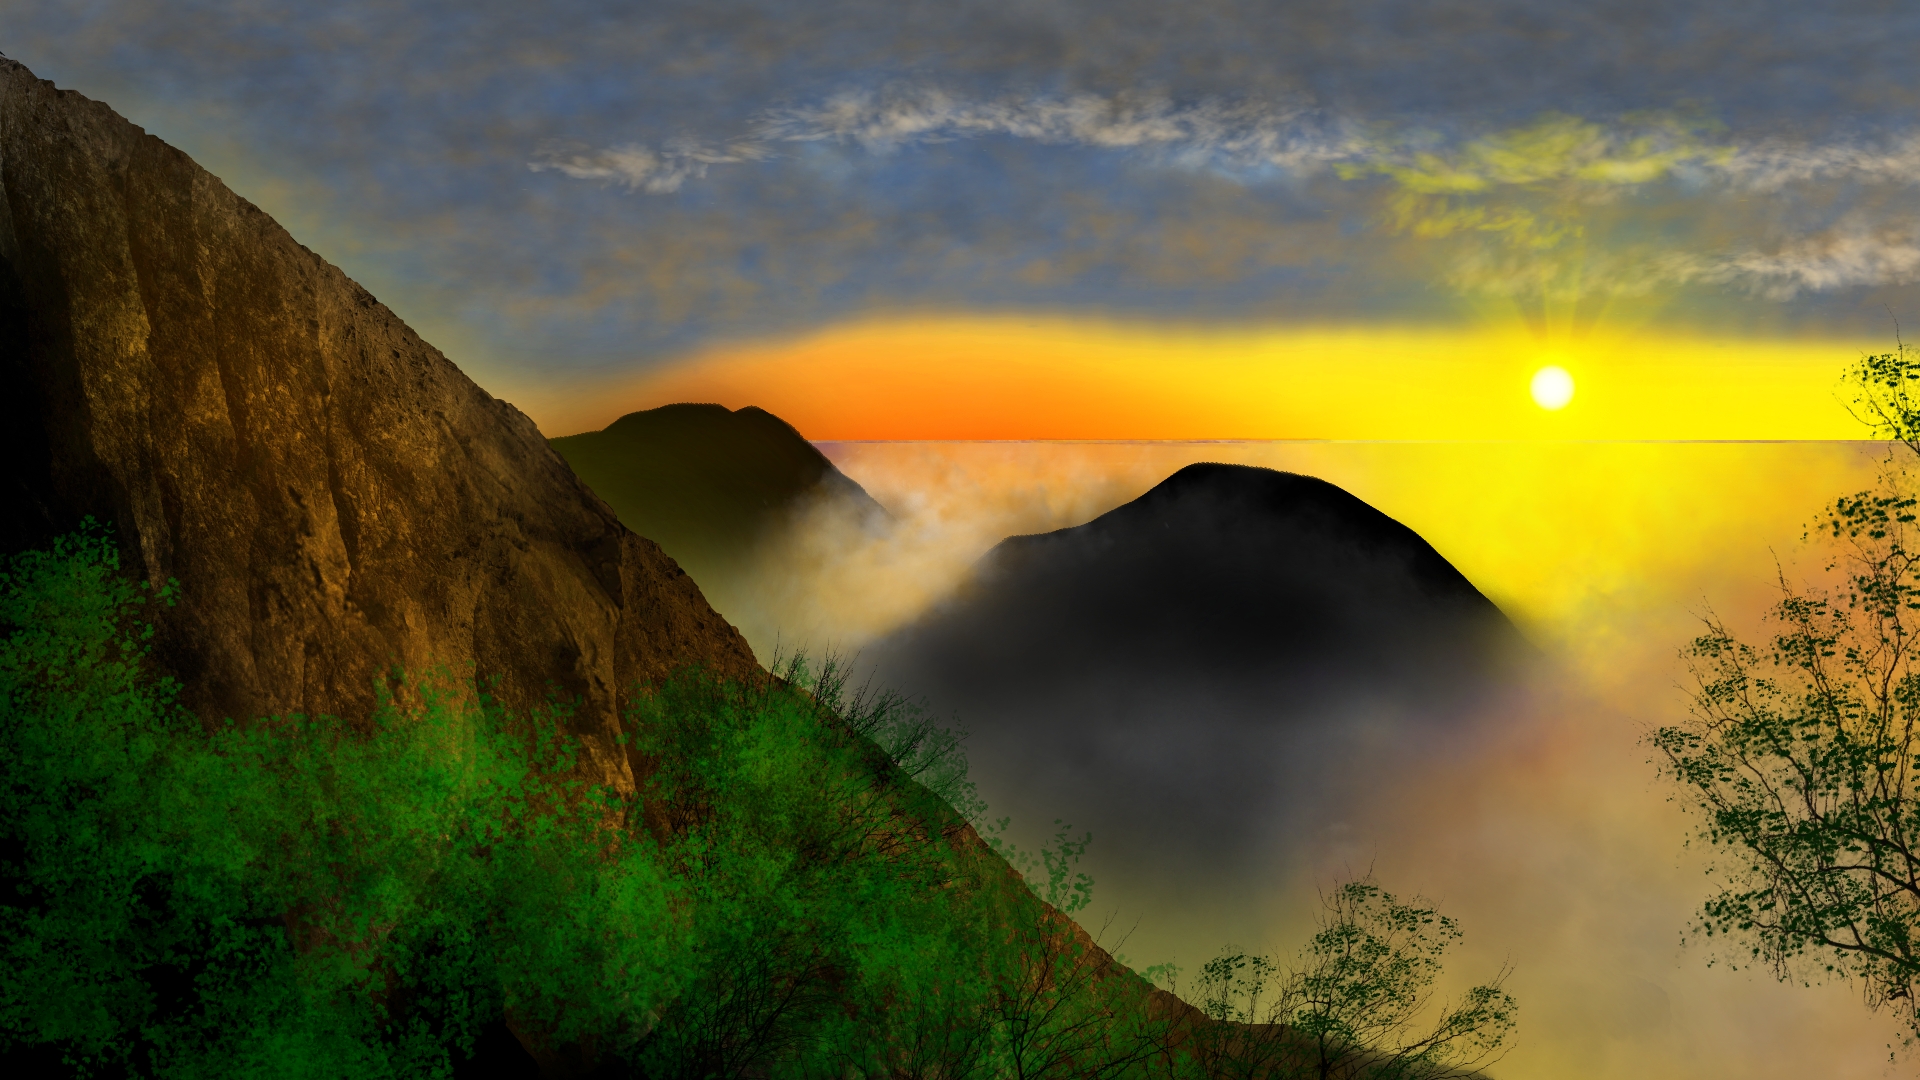 Digital Painting Digital Art Nature Landscape Clouds Sunset Artwork 1920x1080